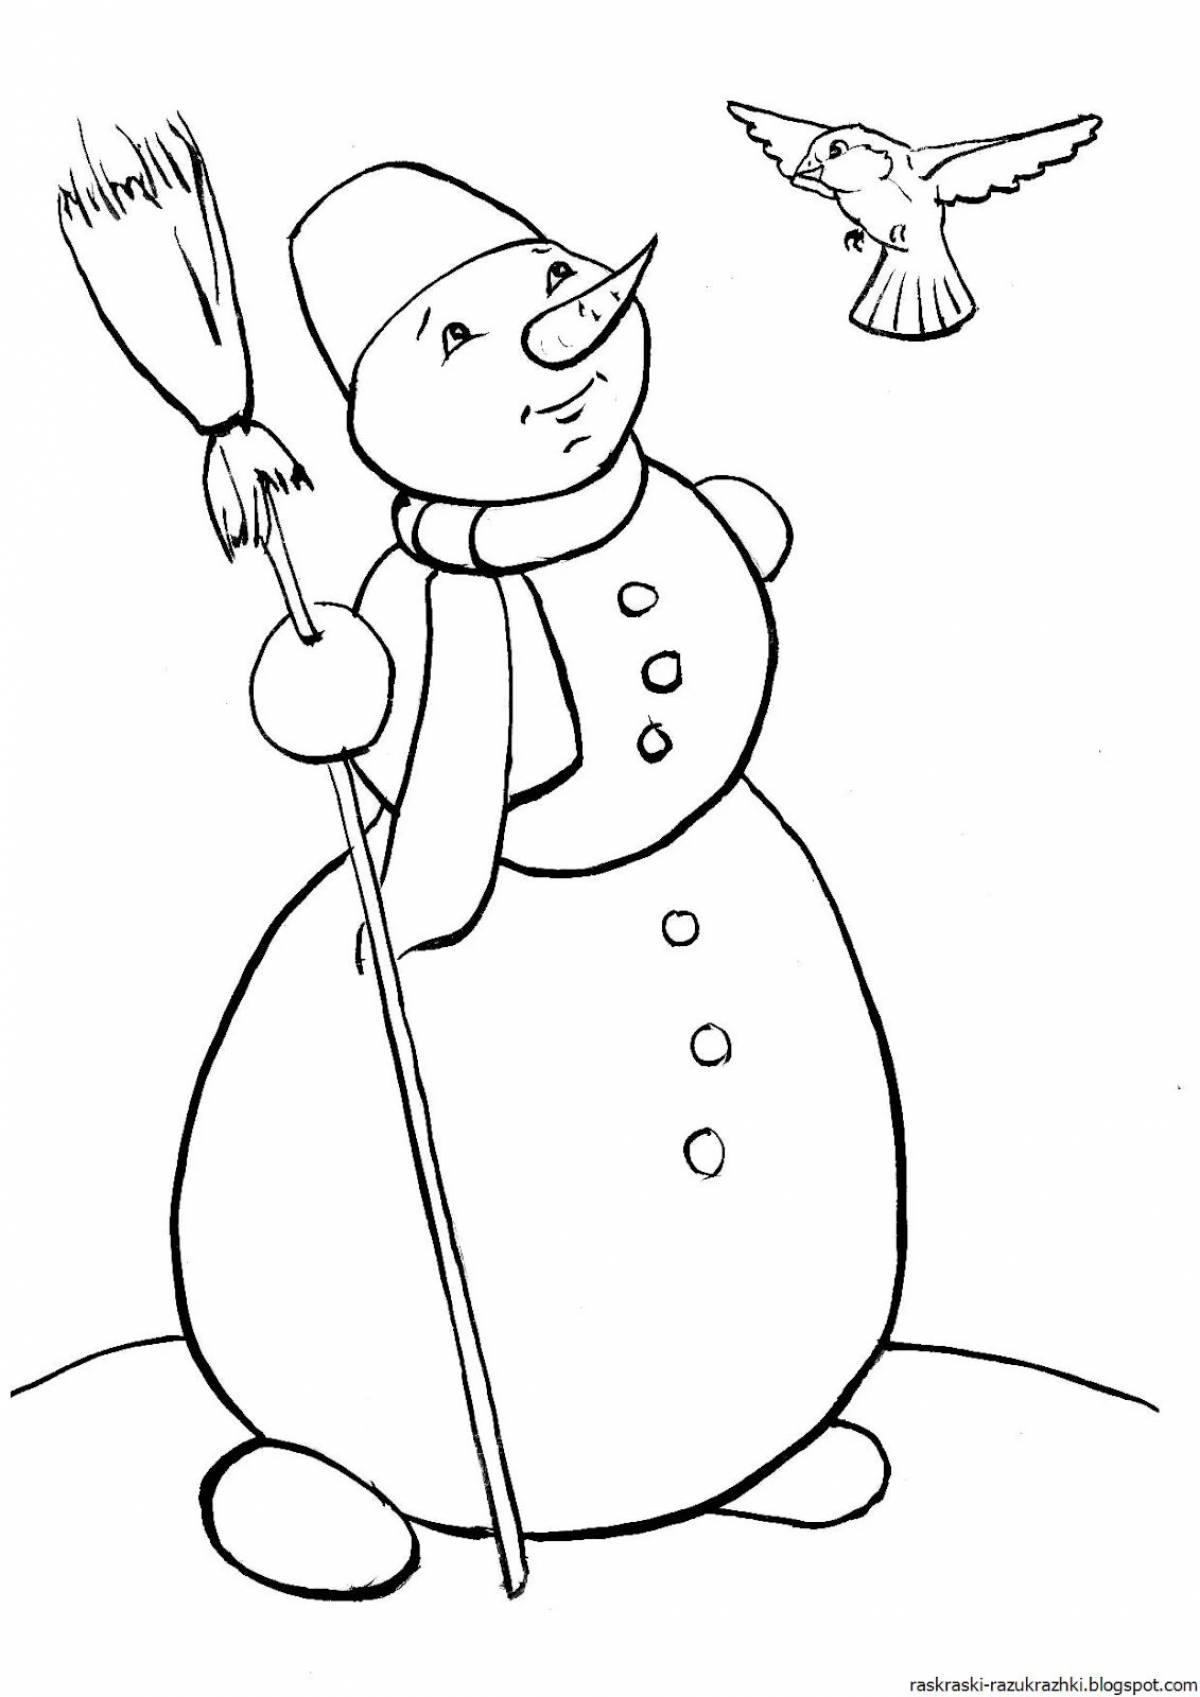 Snowman for kids #5